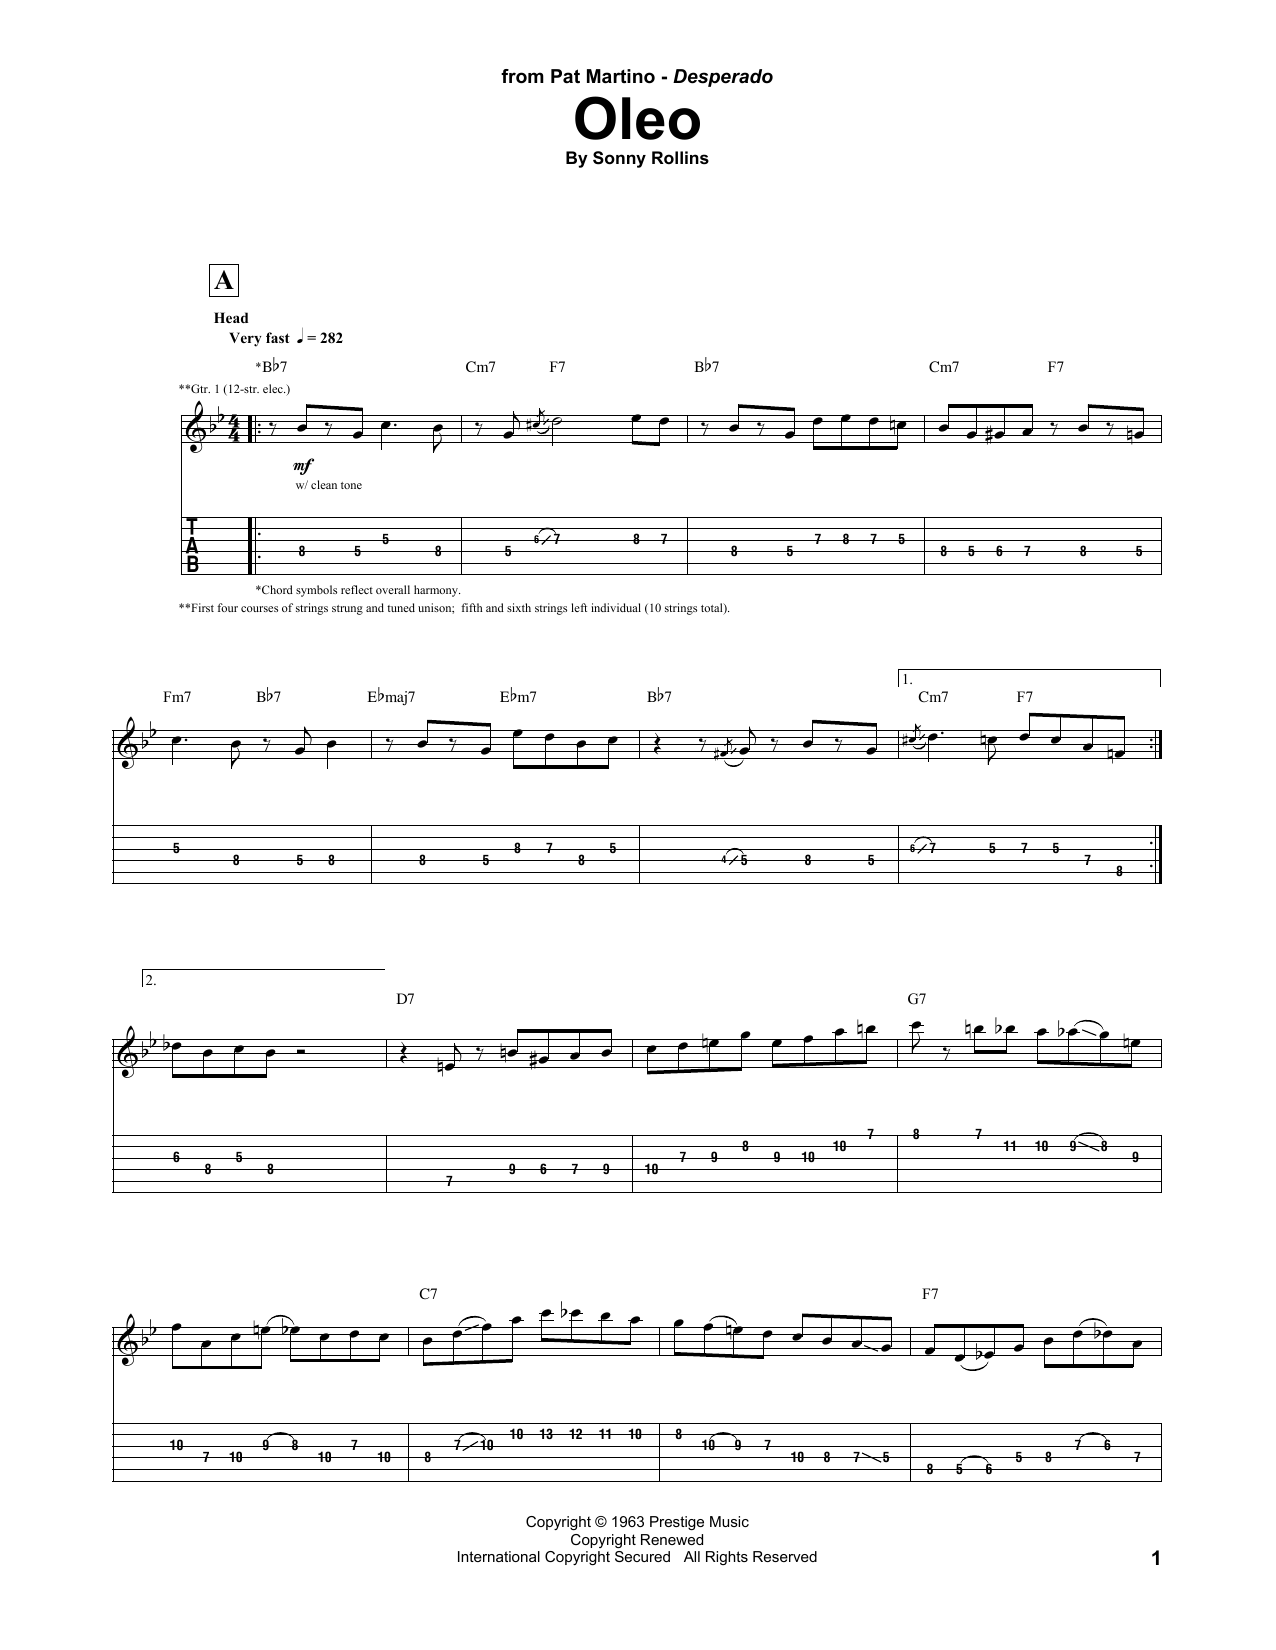 Pat Martino Oleo Sheet Music Notes & Chords for Guitar Tab - Download or Print PDF